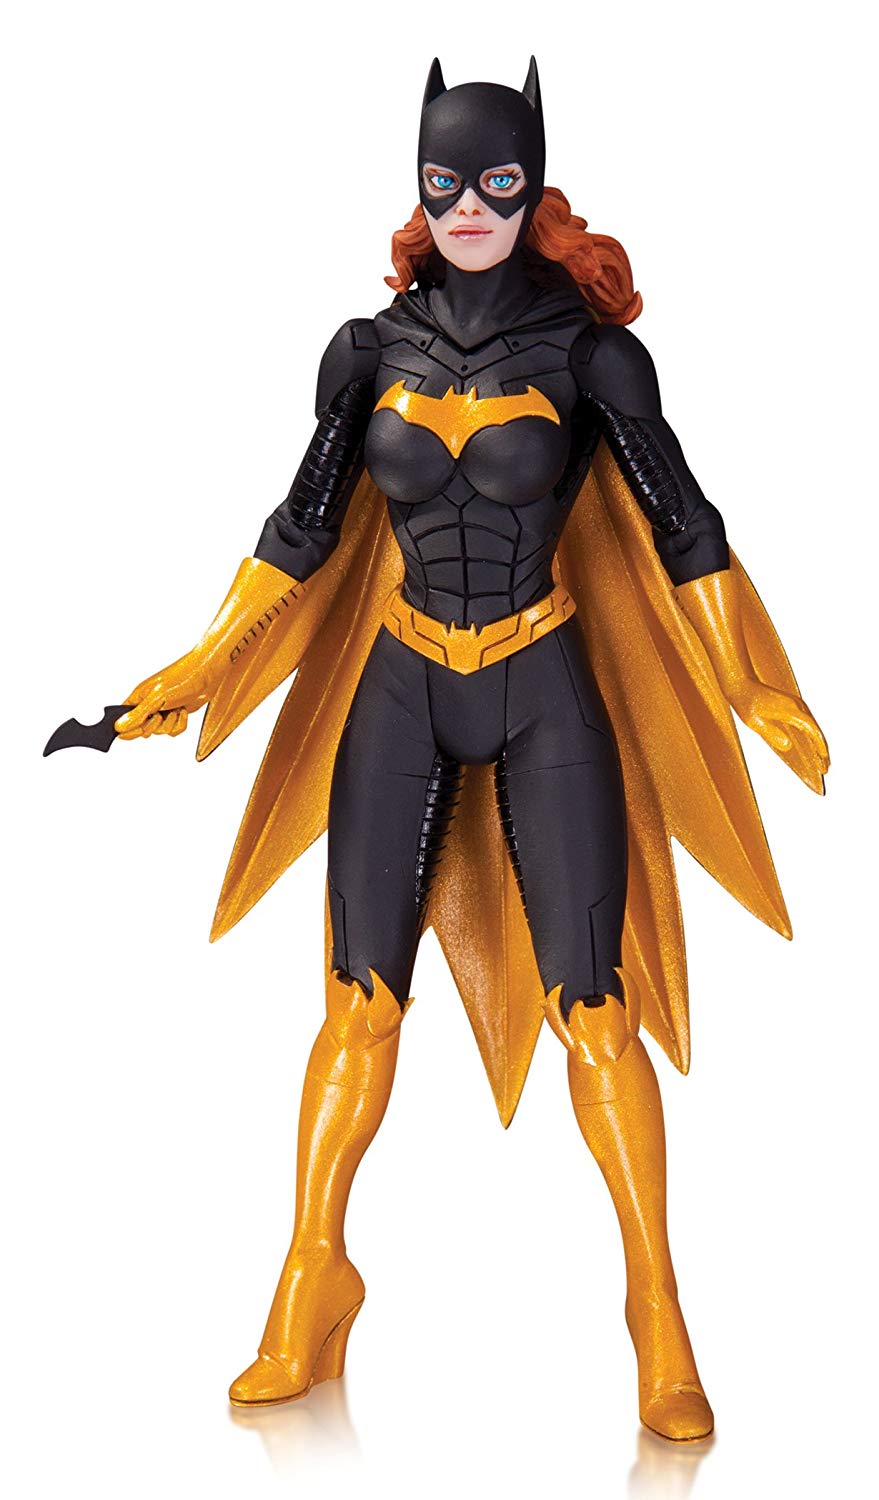 DC Collectibles DC Comics Designer Action Figures Series 3: Batgirl by Greg Capullo Action Figure